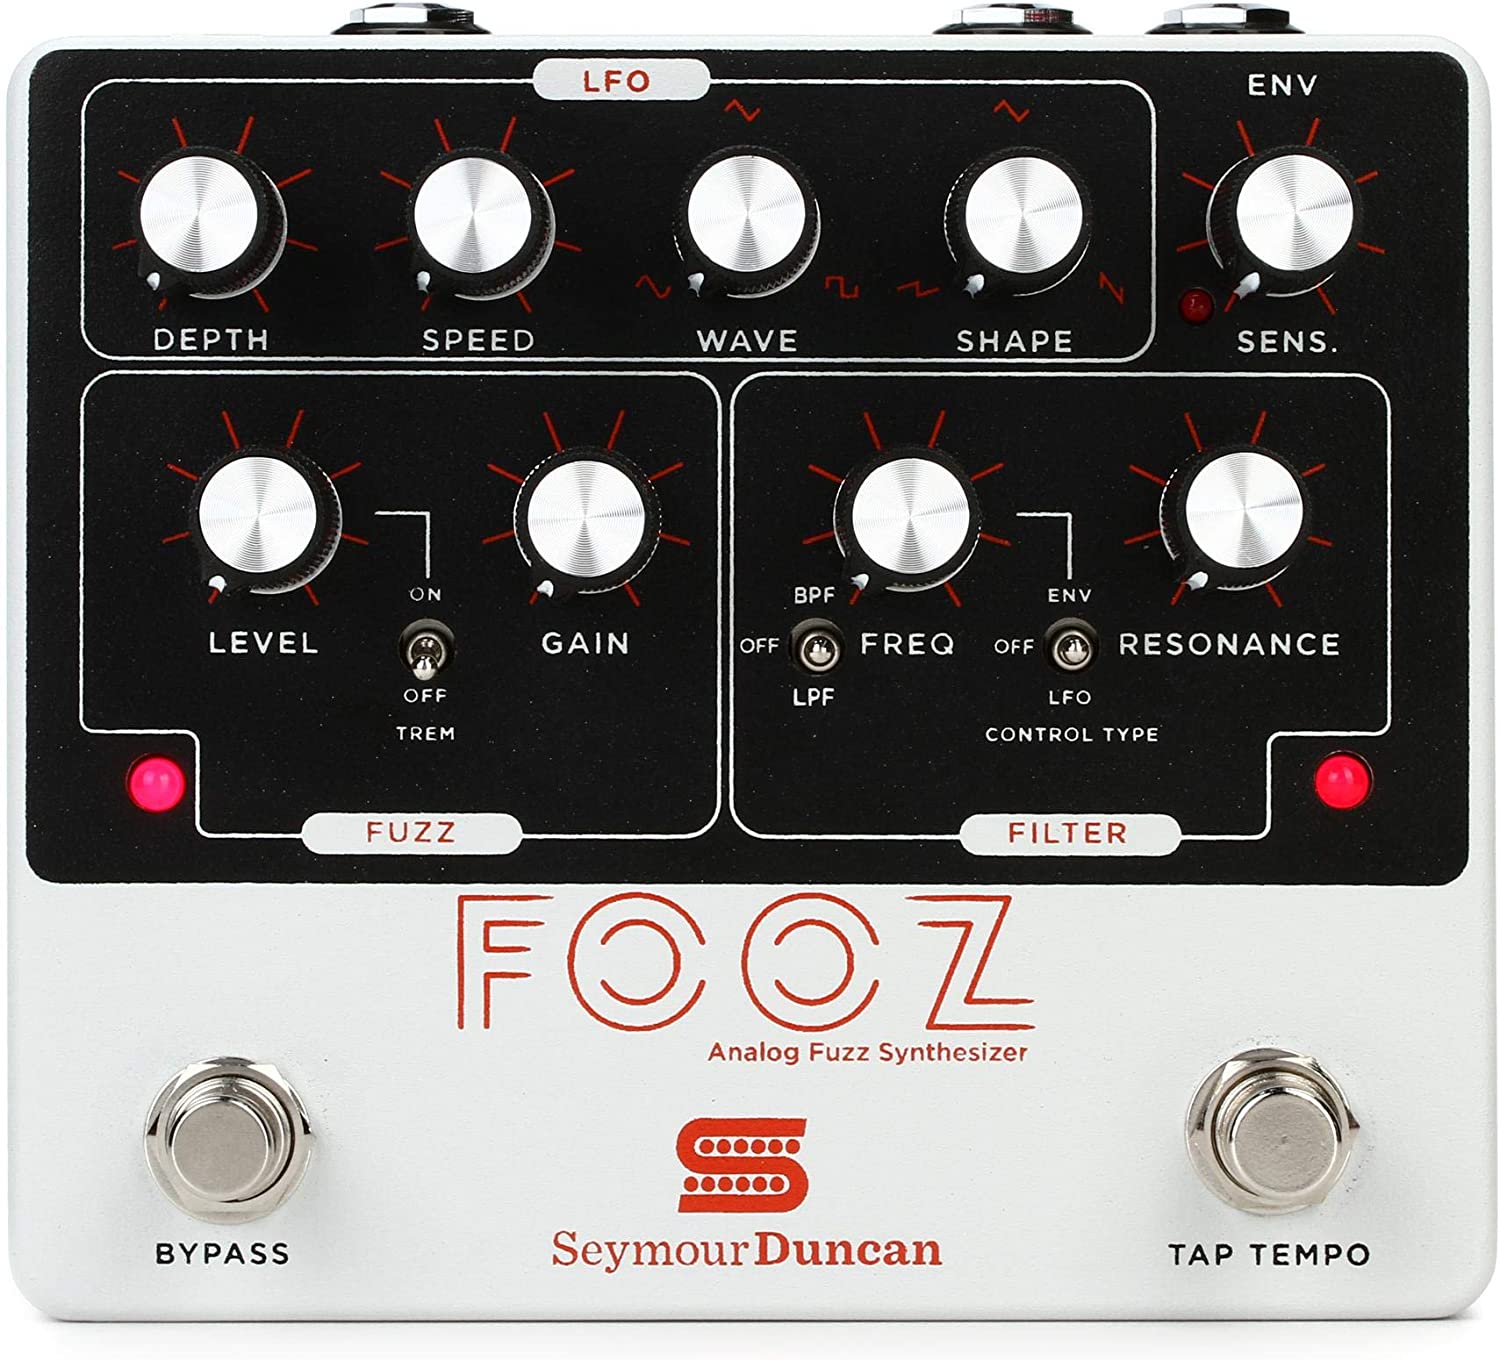 Seymour Duncan Fooz Analog Fuzz Synthesizer Pedal on a white background